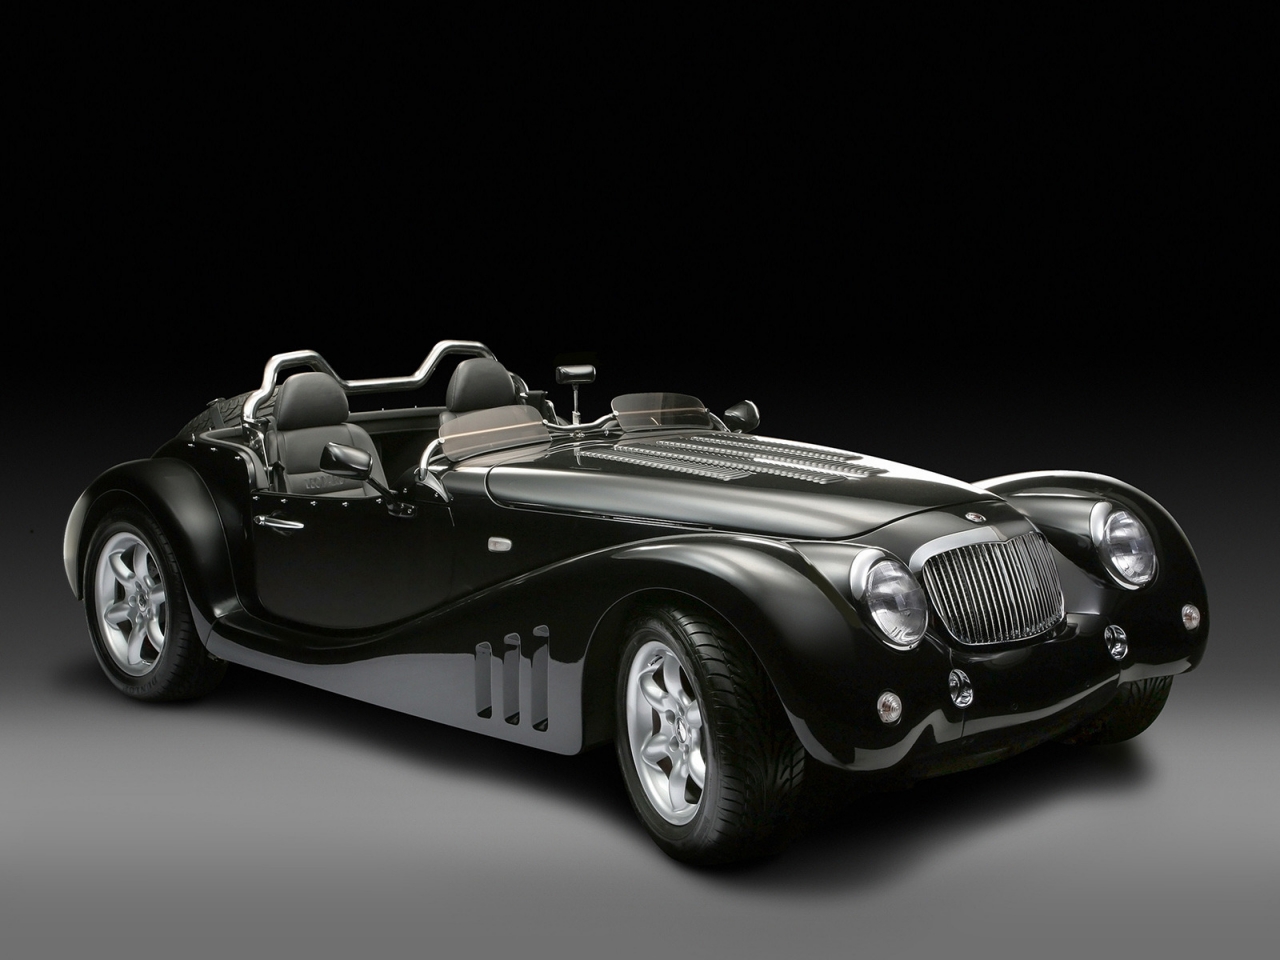 2013 Leopard Roadster Studio for 1280 x 960 resolution